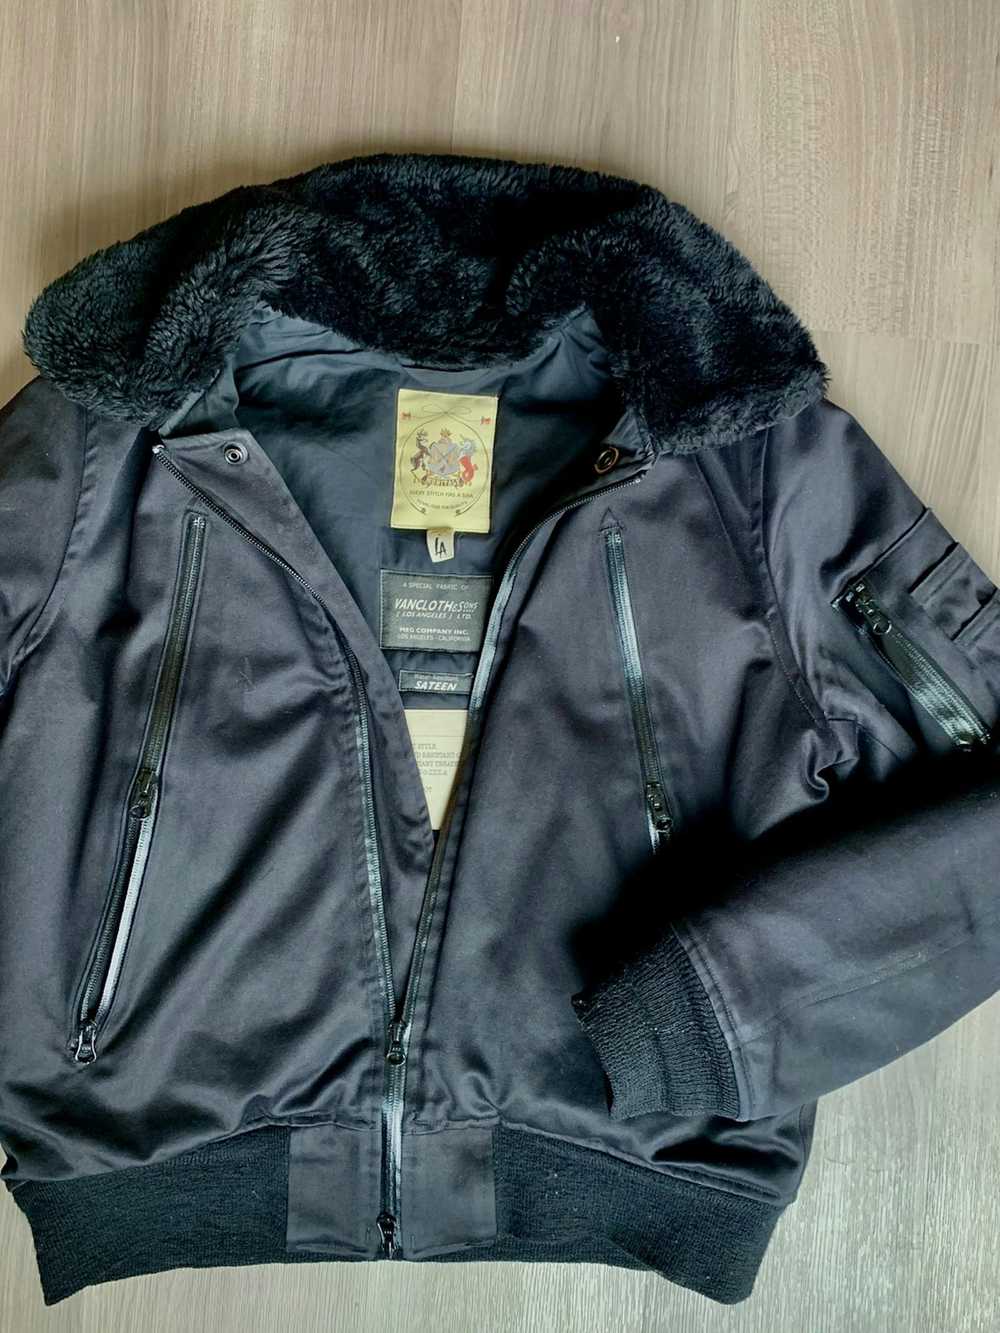 Monitaly Monitaly Bomber Jacket with Faux Fur Lin… - image 2